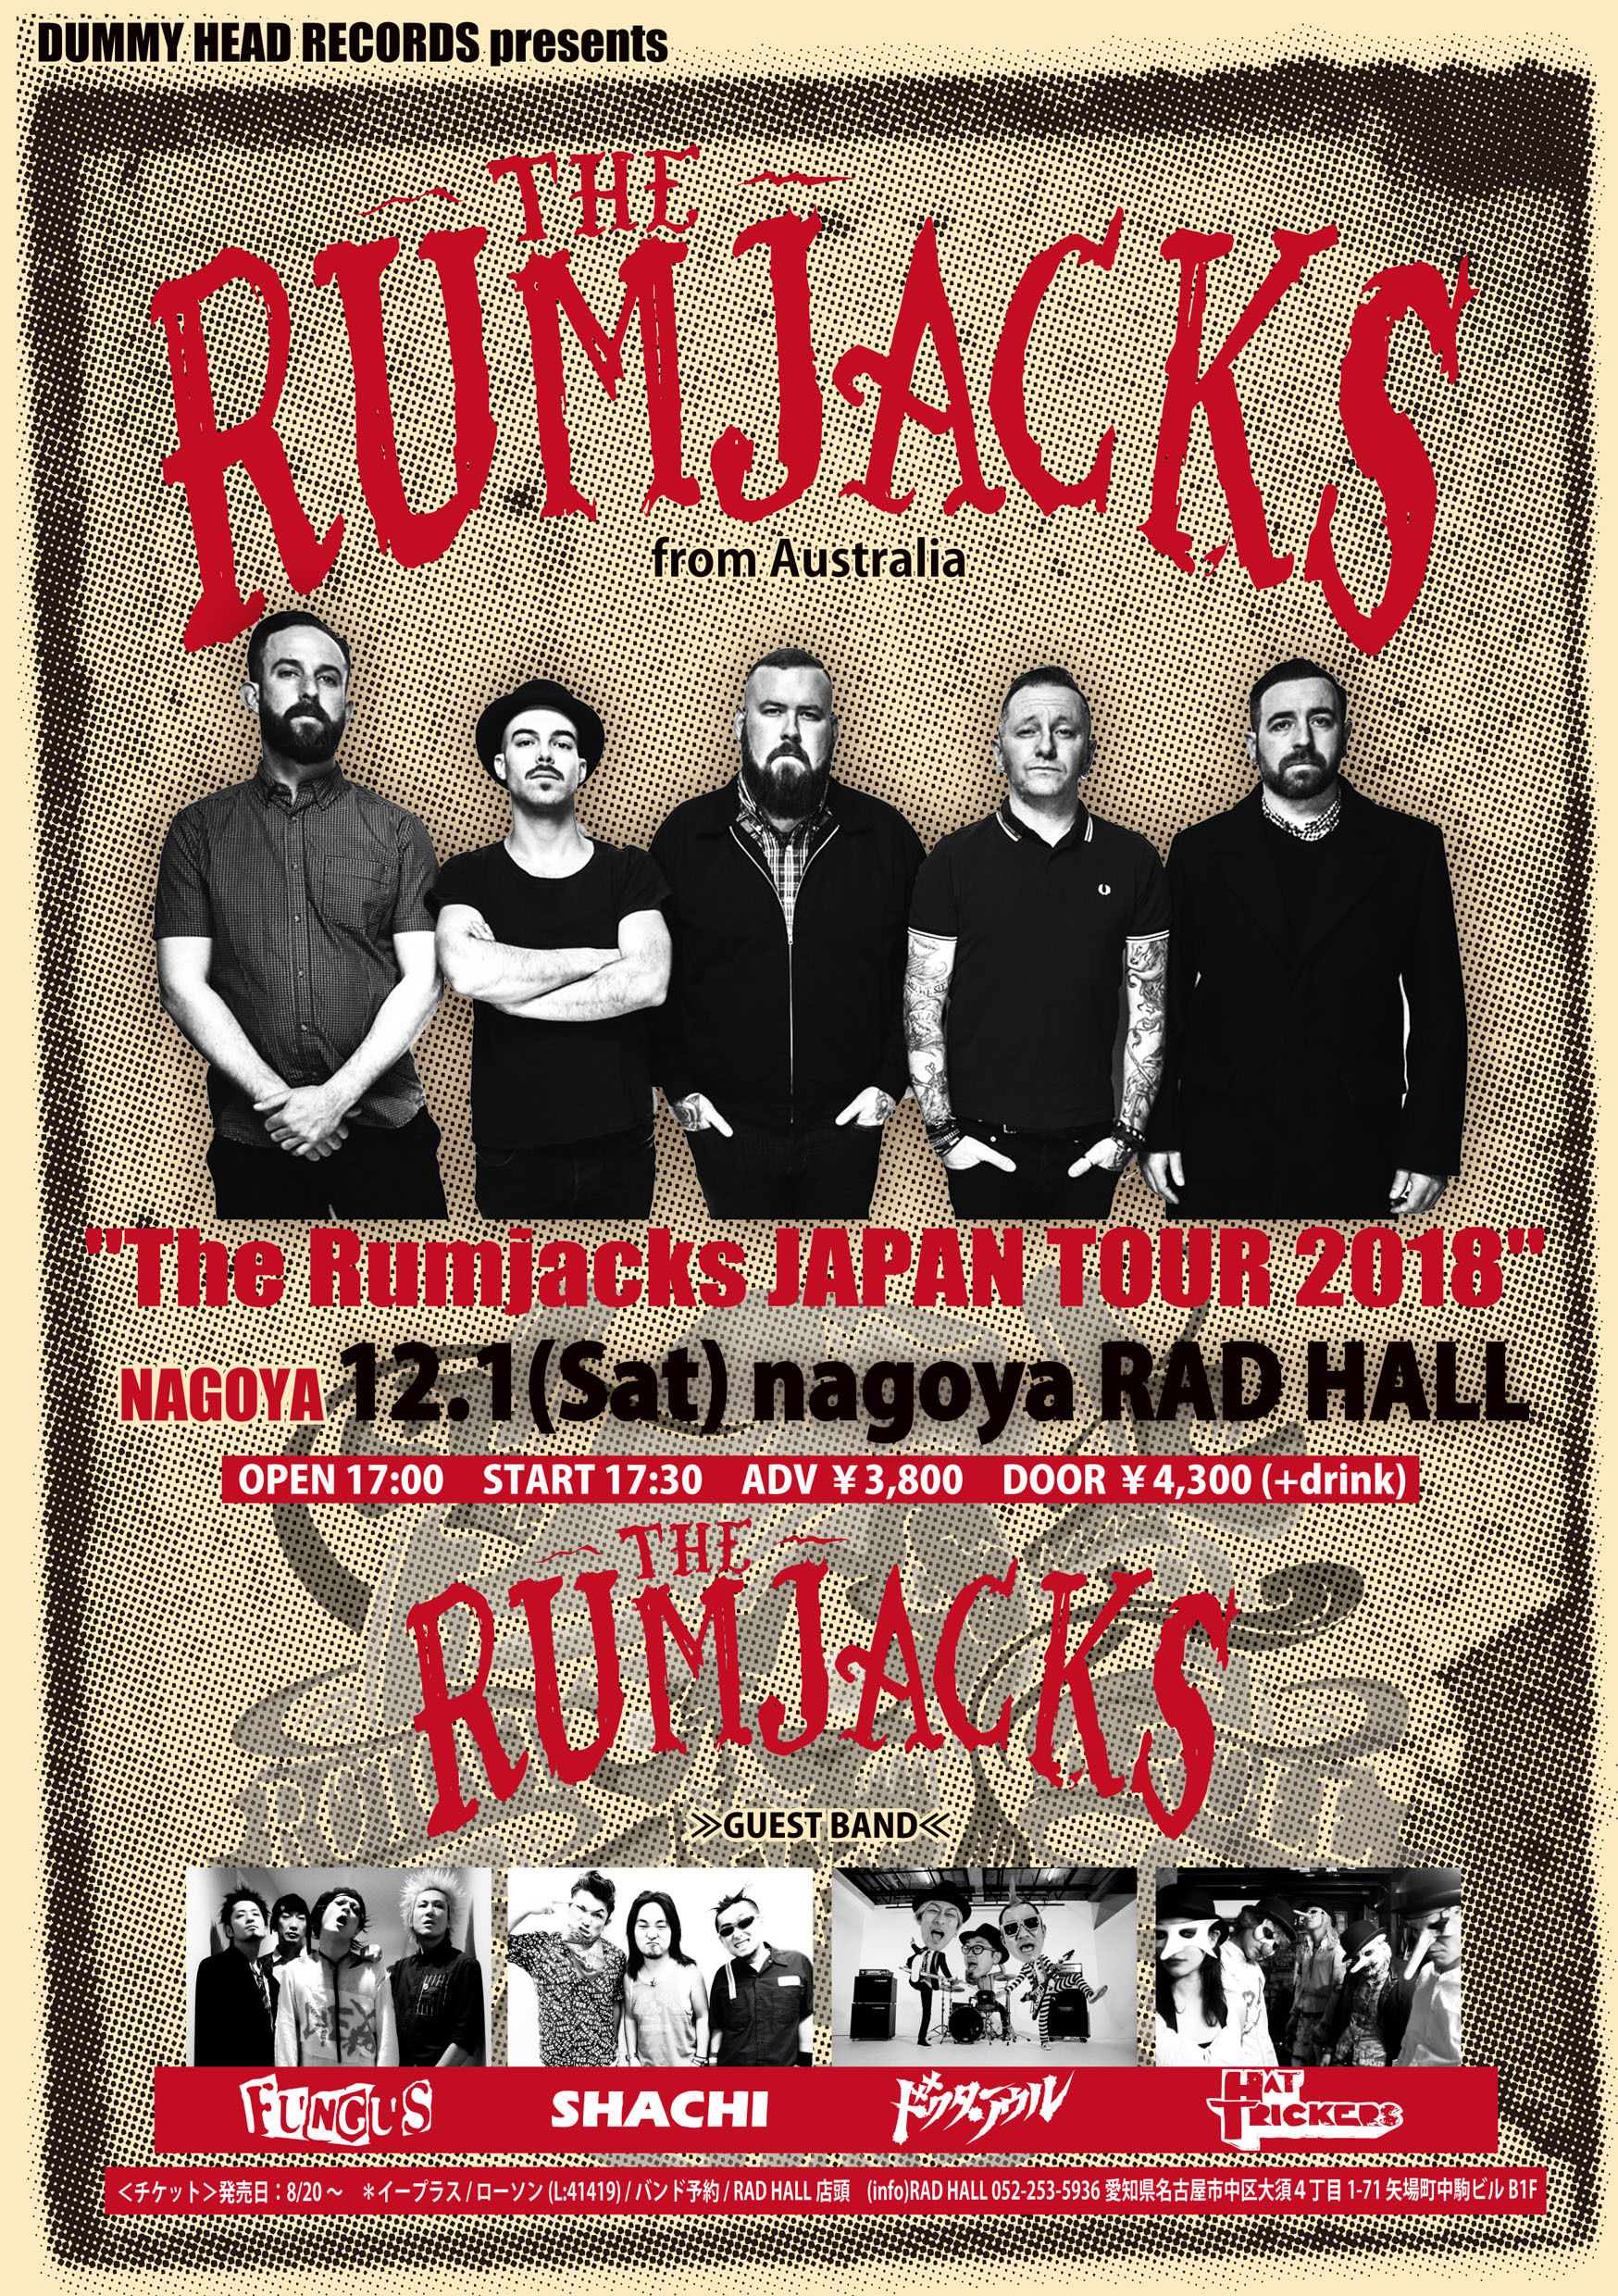 The-Rumjacks-Japan-Tour_NAGOYA_20180919002341.jpg